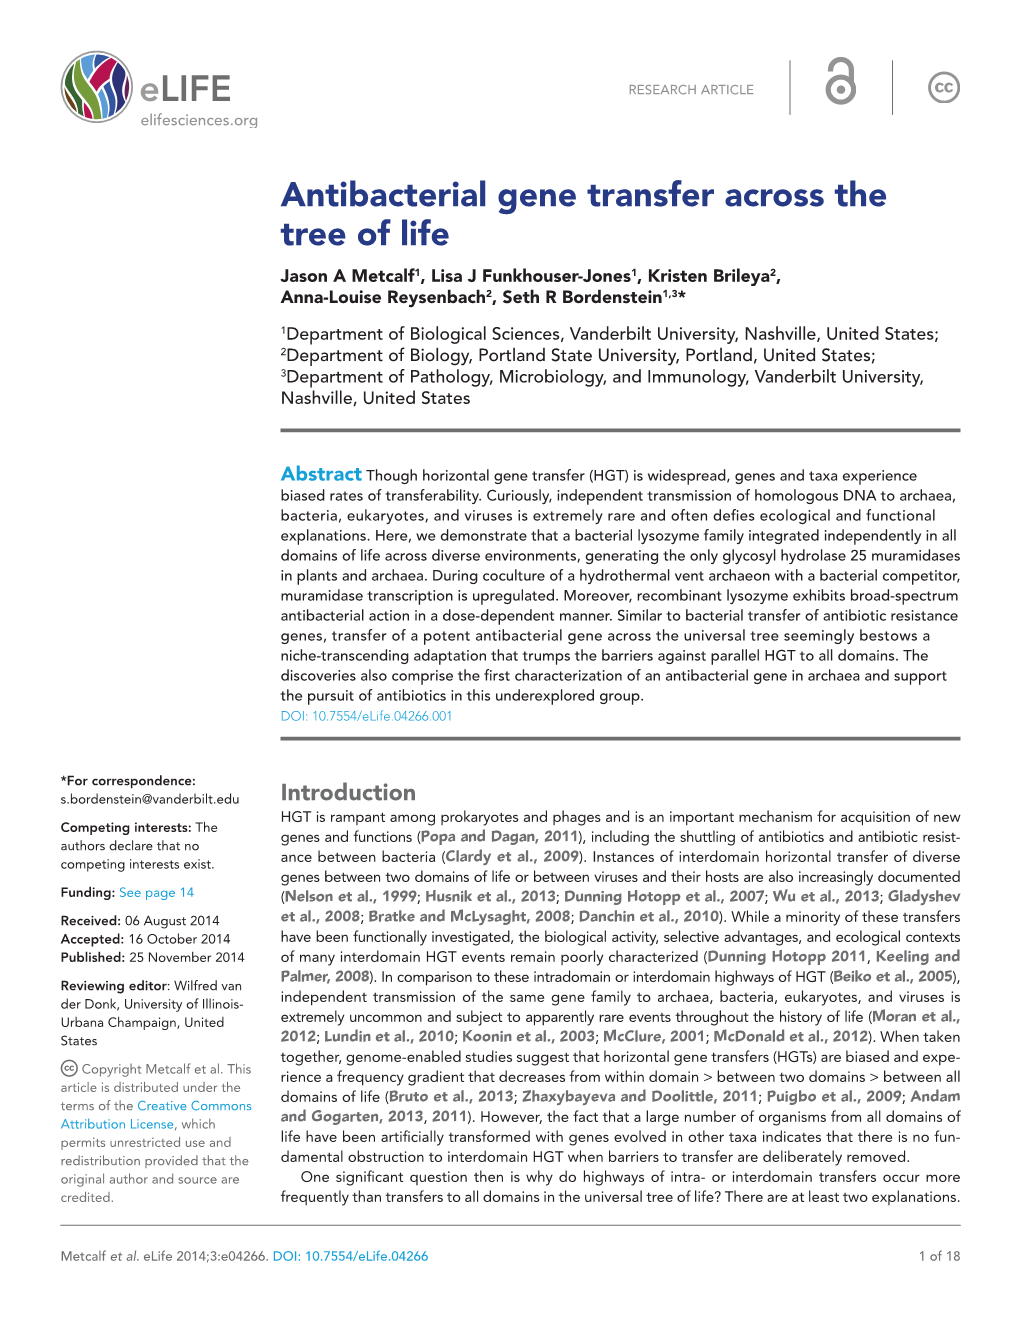 Antibacterial Gene Transfer Across the Tree of Life Jason a Metcalf1, Lisa J Funkhouser-Jones1, Kristen Brileya2, Anna-Louise Reysenbach2, Seth R Bordenstein1,3*